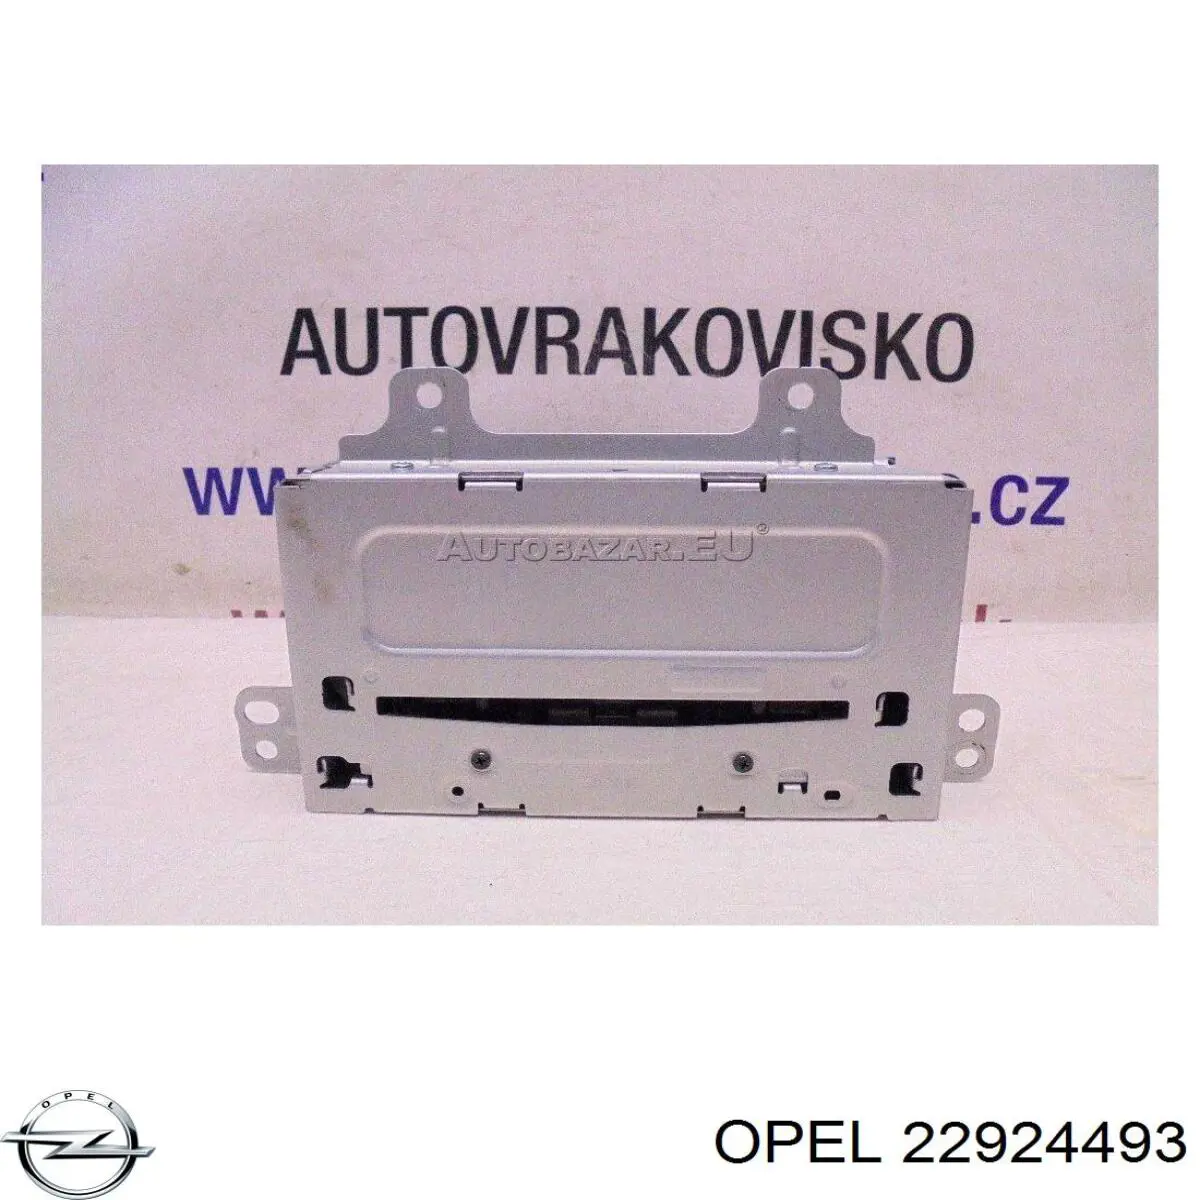 22924493 Opel radio (radio am/fm)